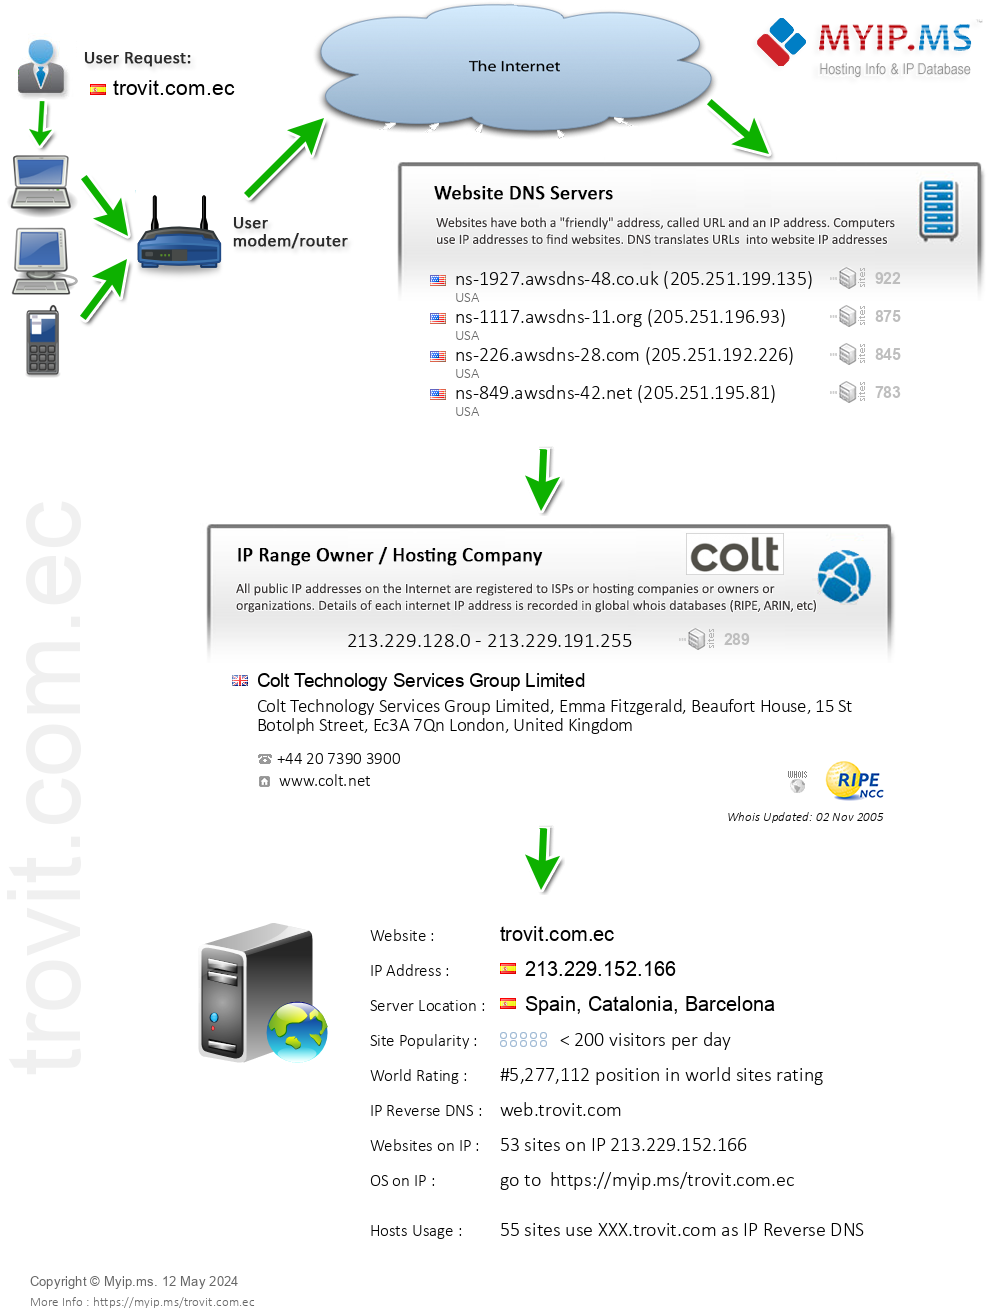 Trovit.com.ec - Website Hosting Visual IP Diagram